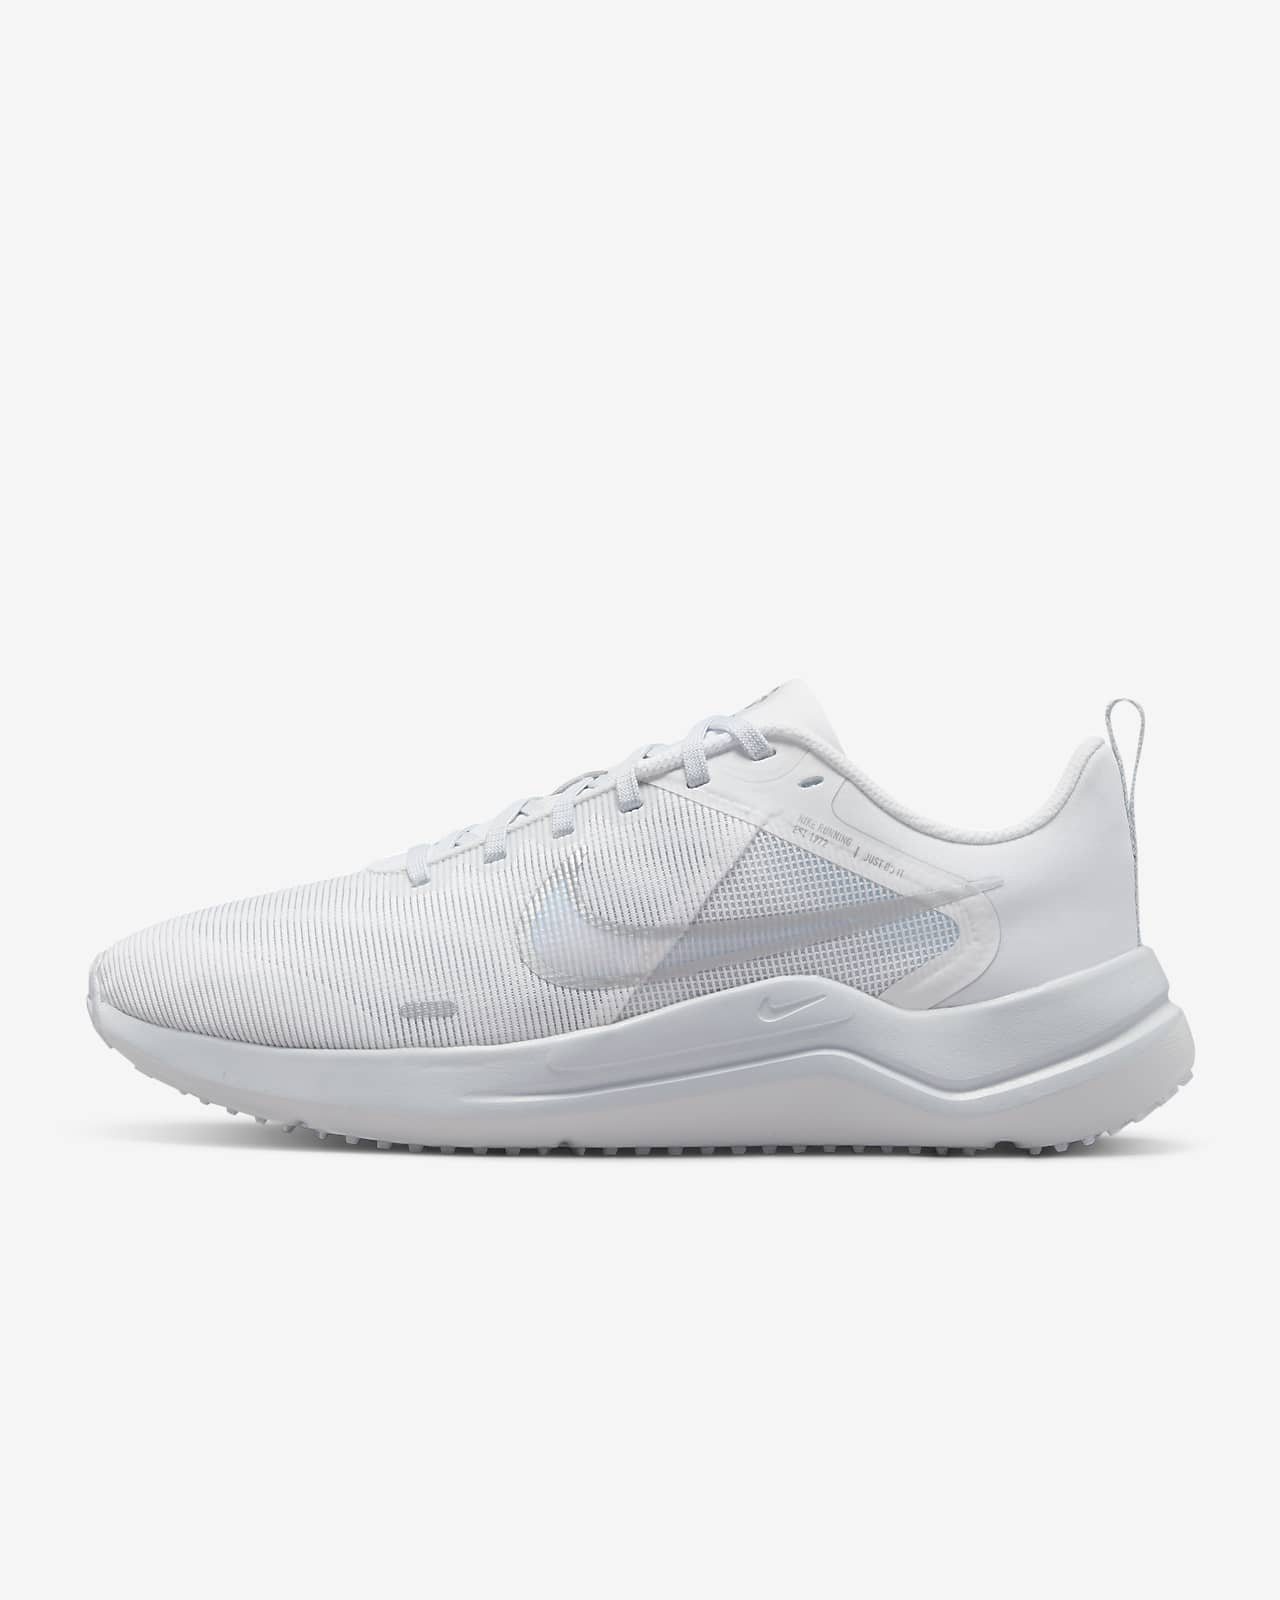 Nike Men's Air Max 2017 Running Shoes (11 M US, Cool Grey/Antracite/Dark  Grey) - Walmart.com